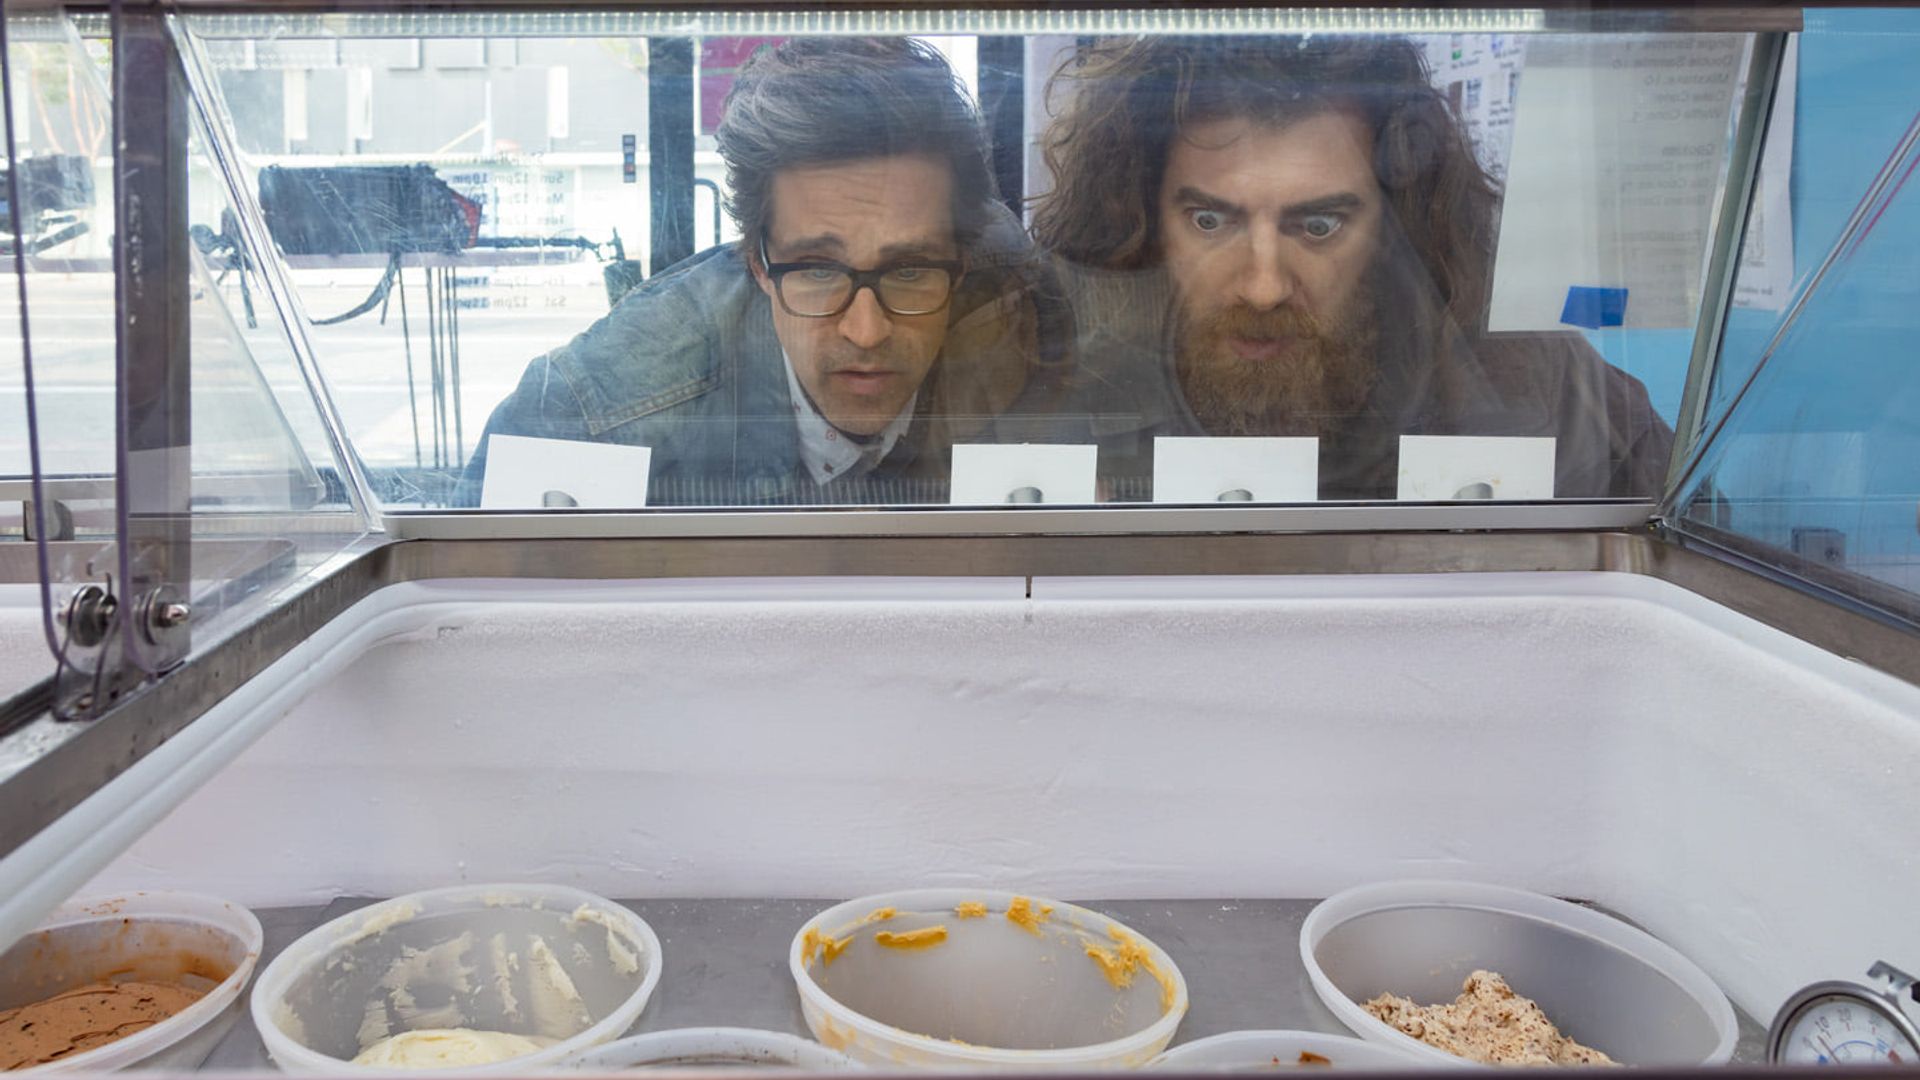 Inside Eats with Rhett & Link background